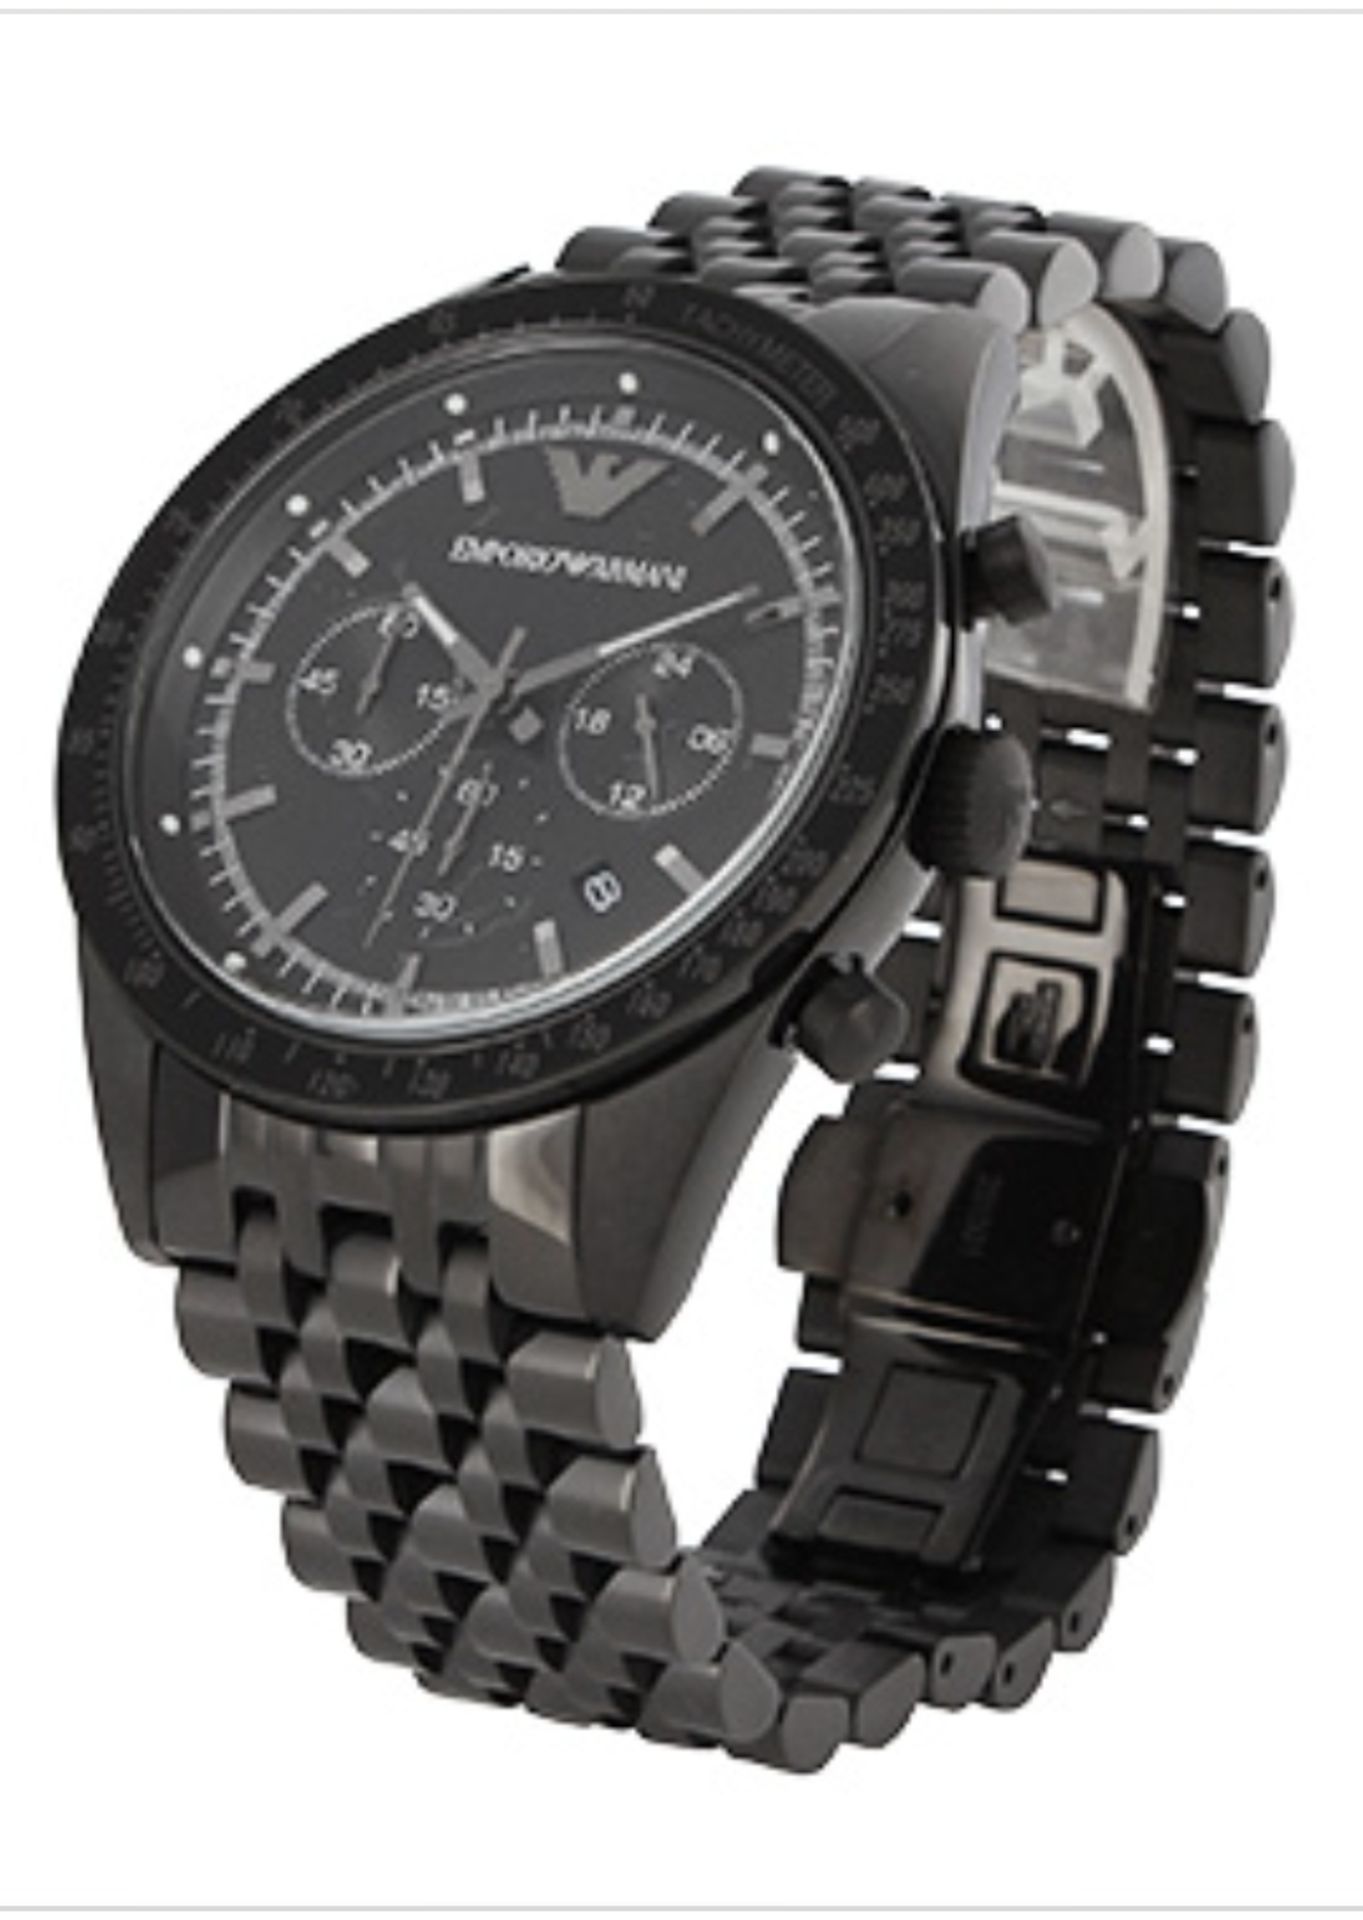 Emporio Armani AR5989 Men's Tazio Black Stainless Steel Bracelet Chronograph Watch - Image 4 of 9